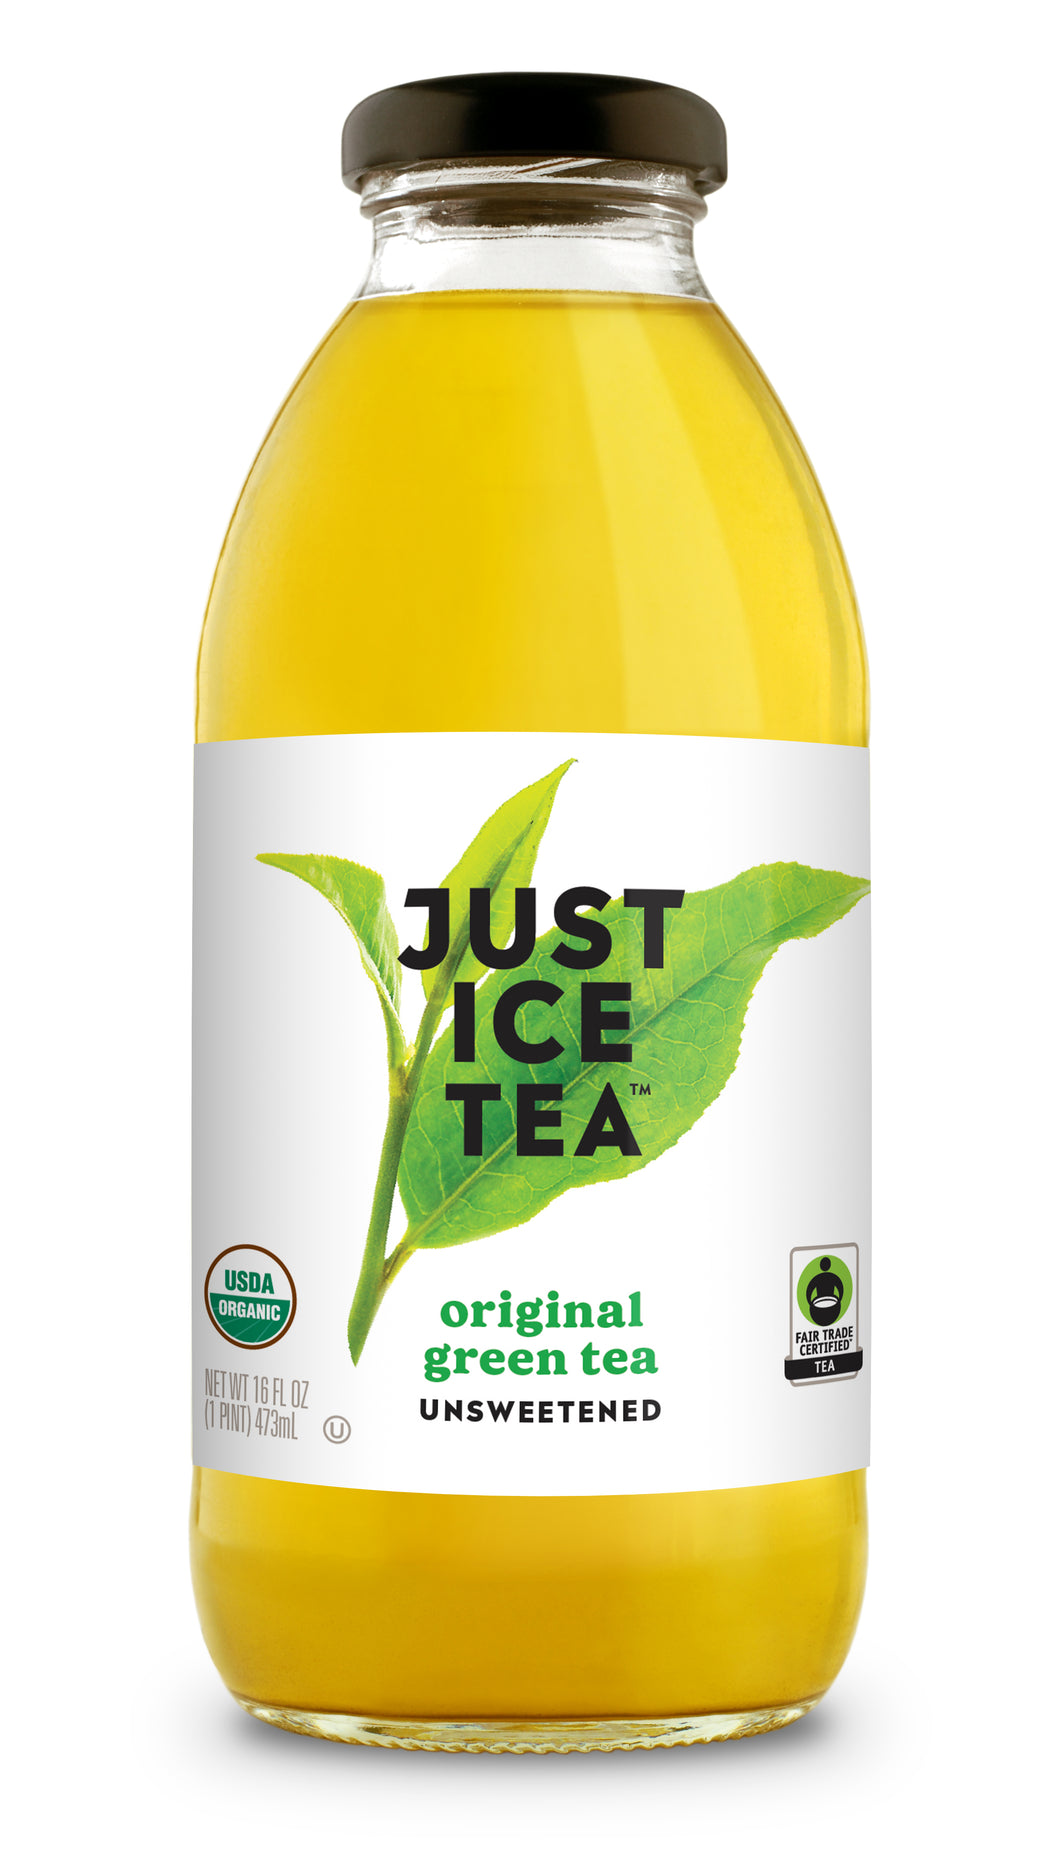 Just Ice Tea, Original Unsweetened Green Tea, 16oz (Pack of 12)